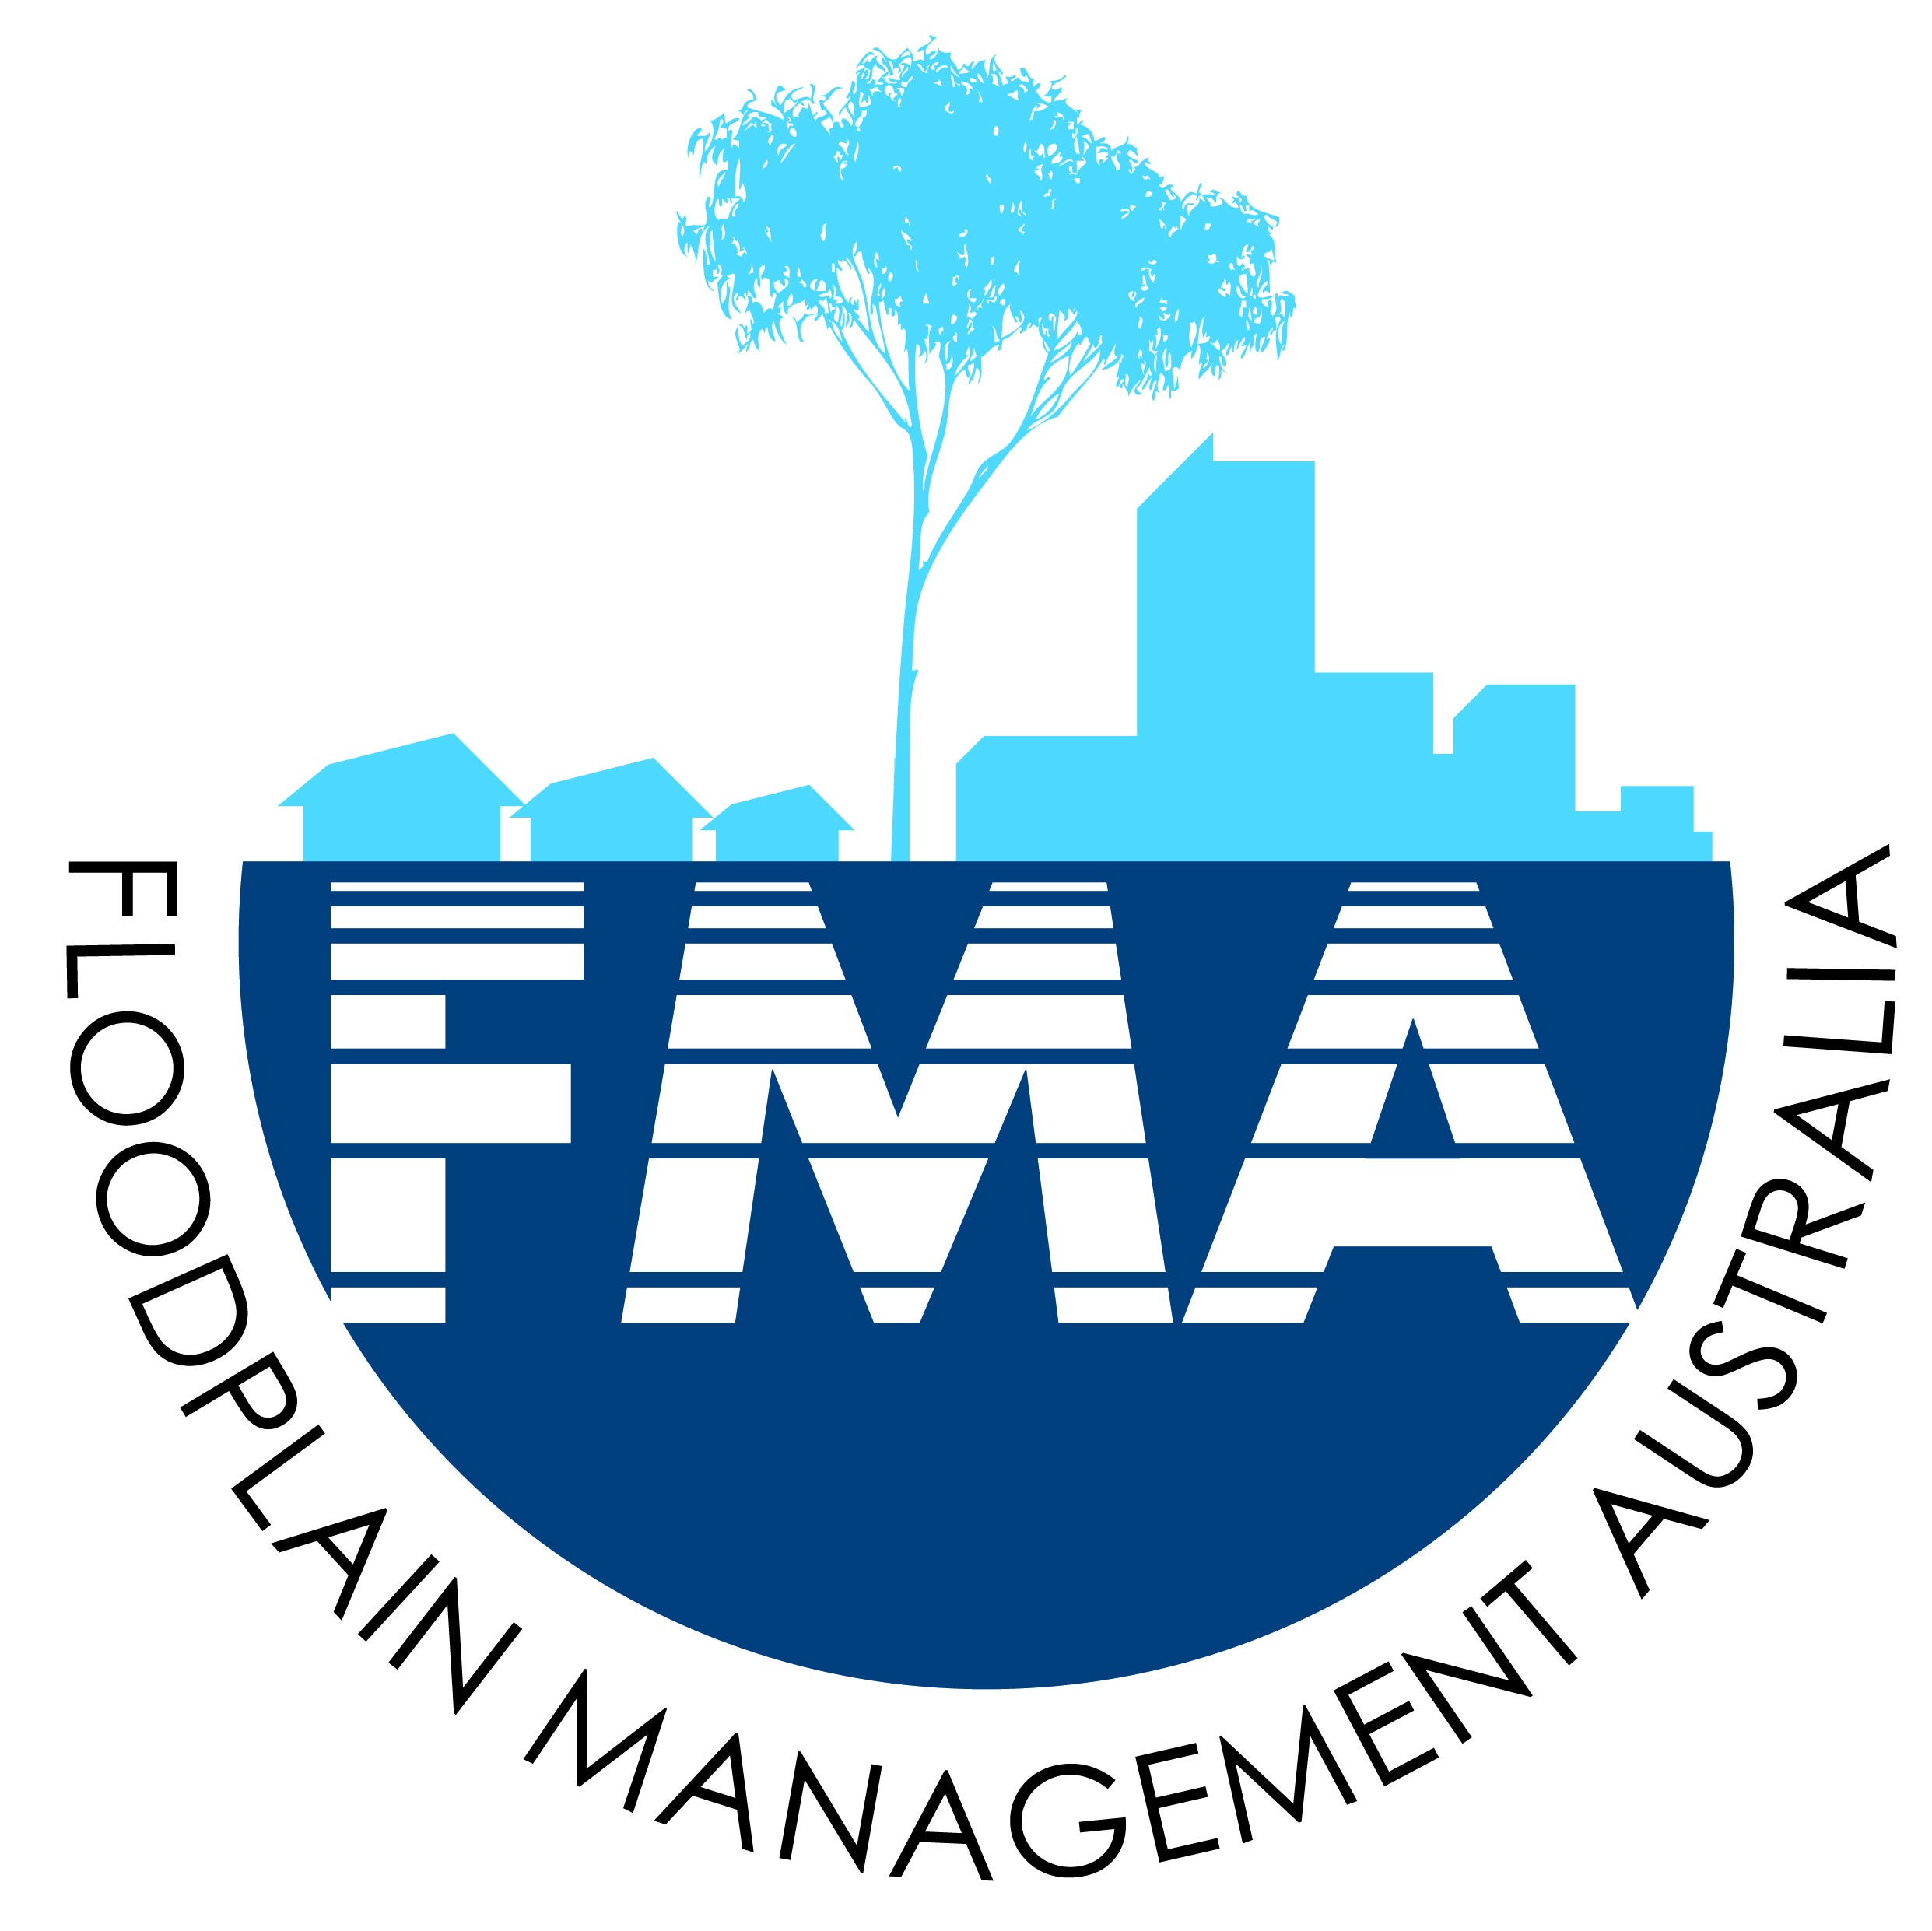 Floodplain Management Australia